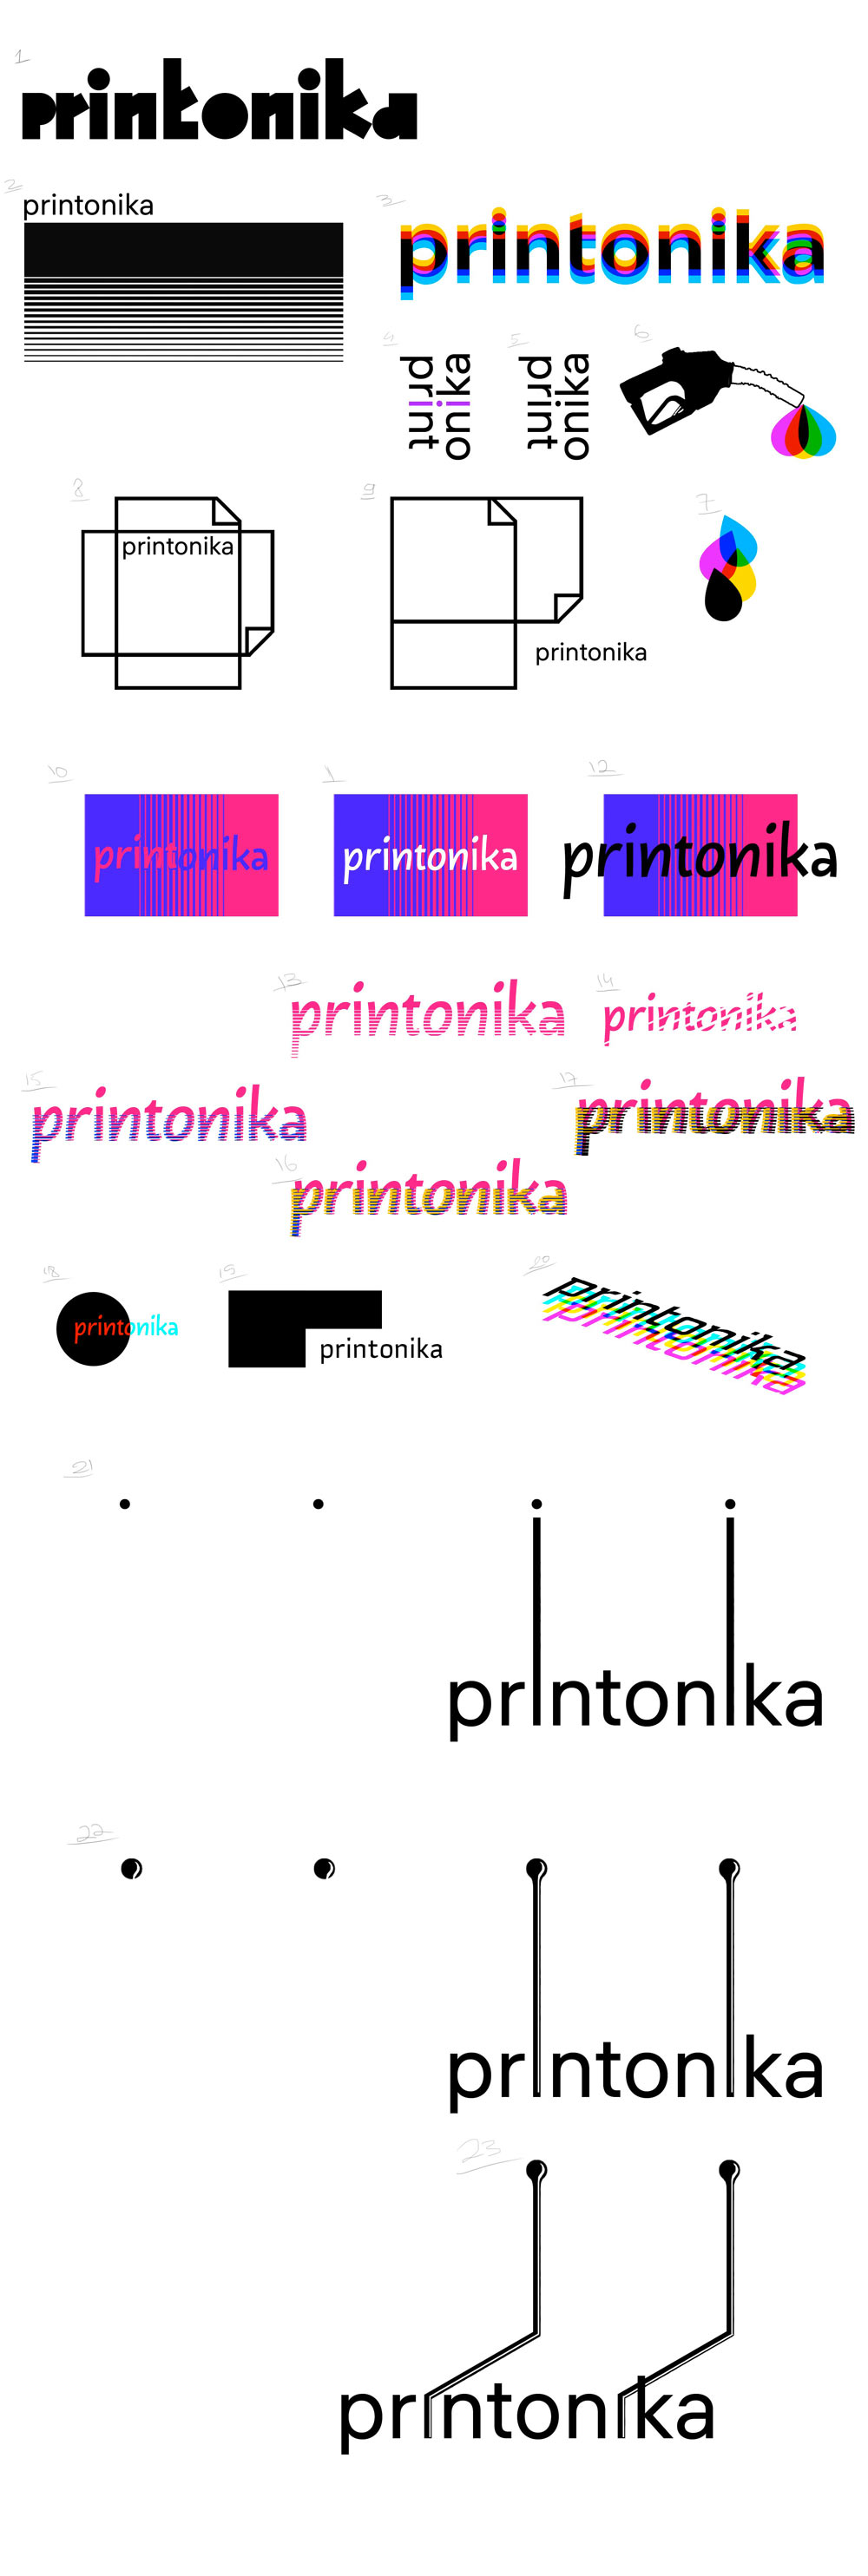 printonika process 02